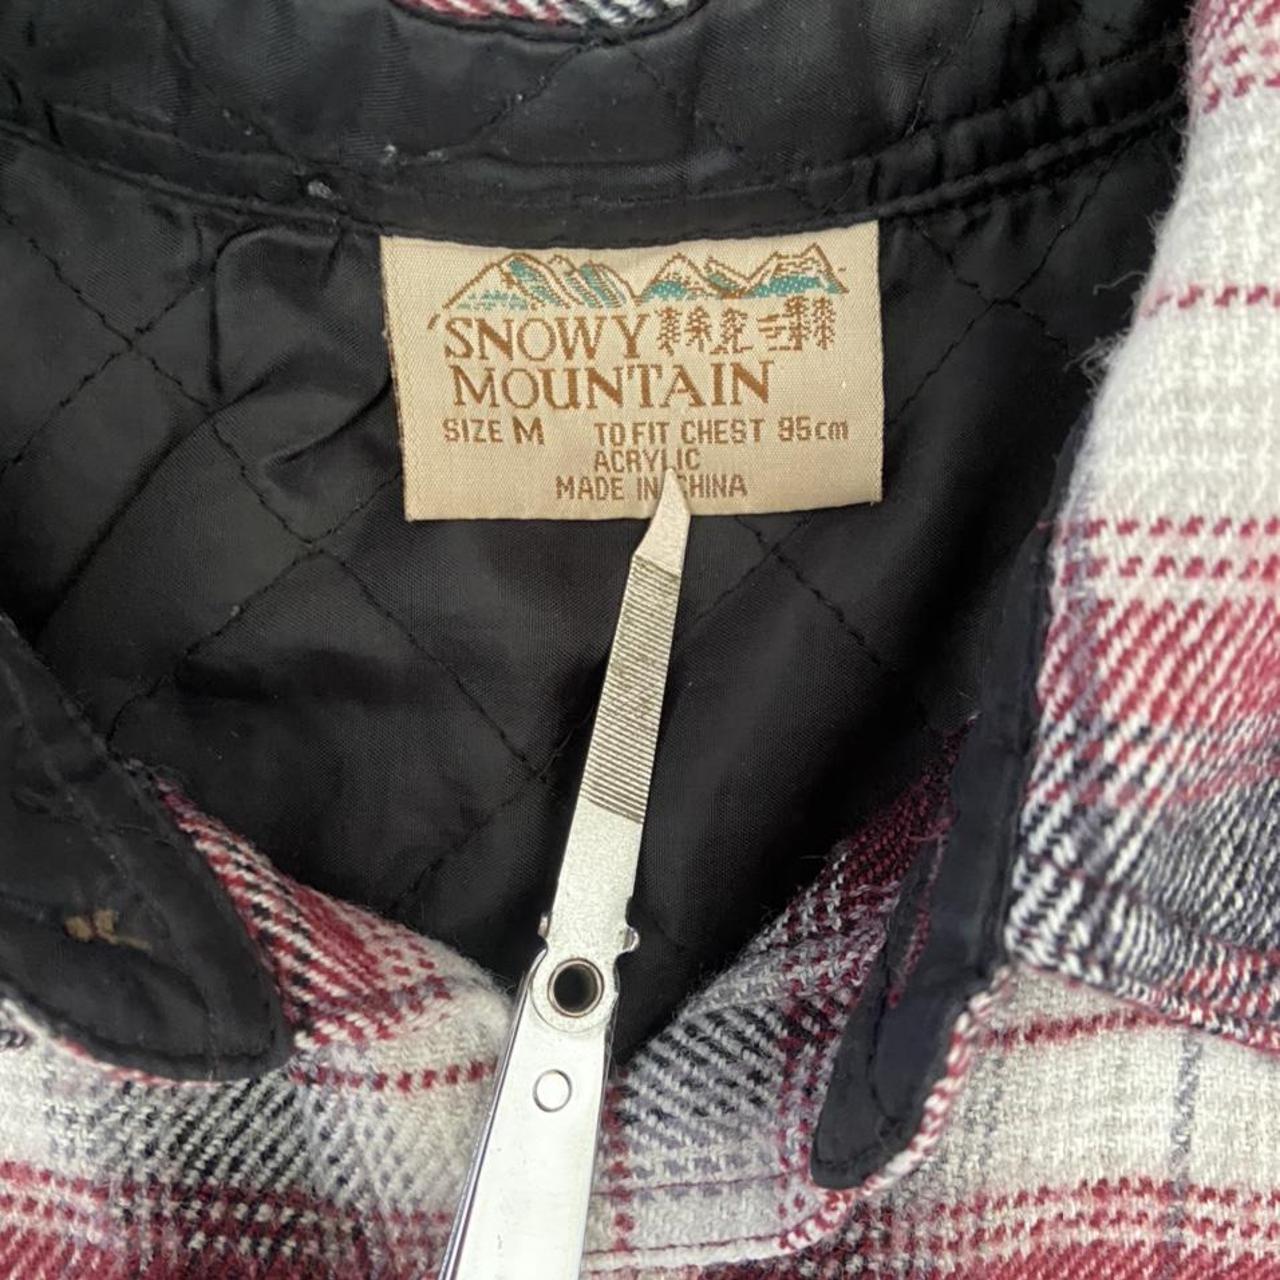 Vintage Snowy Mountain checkered fleece Size M fits... - Depop